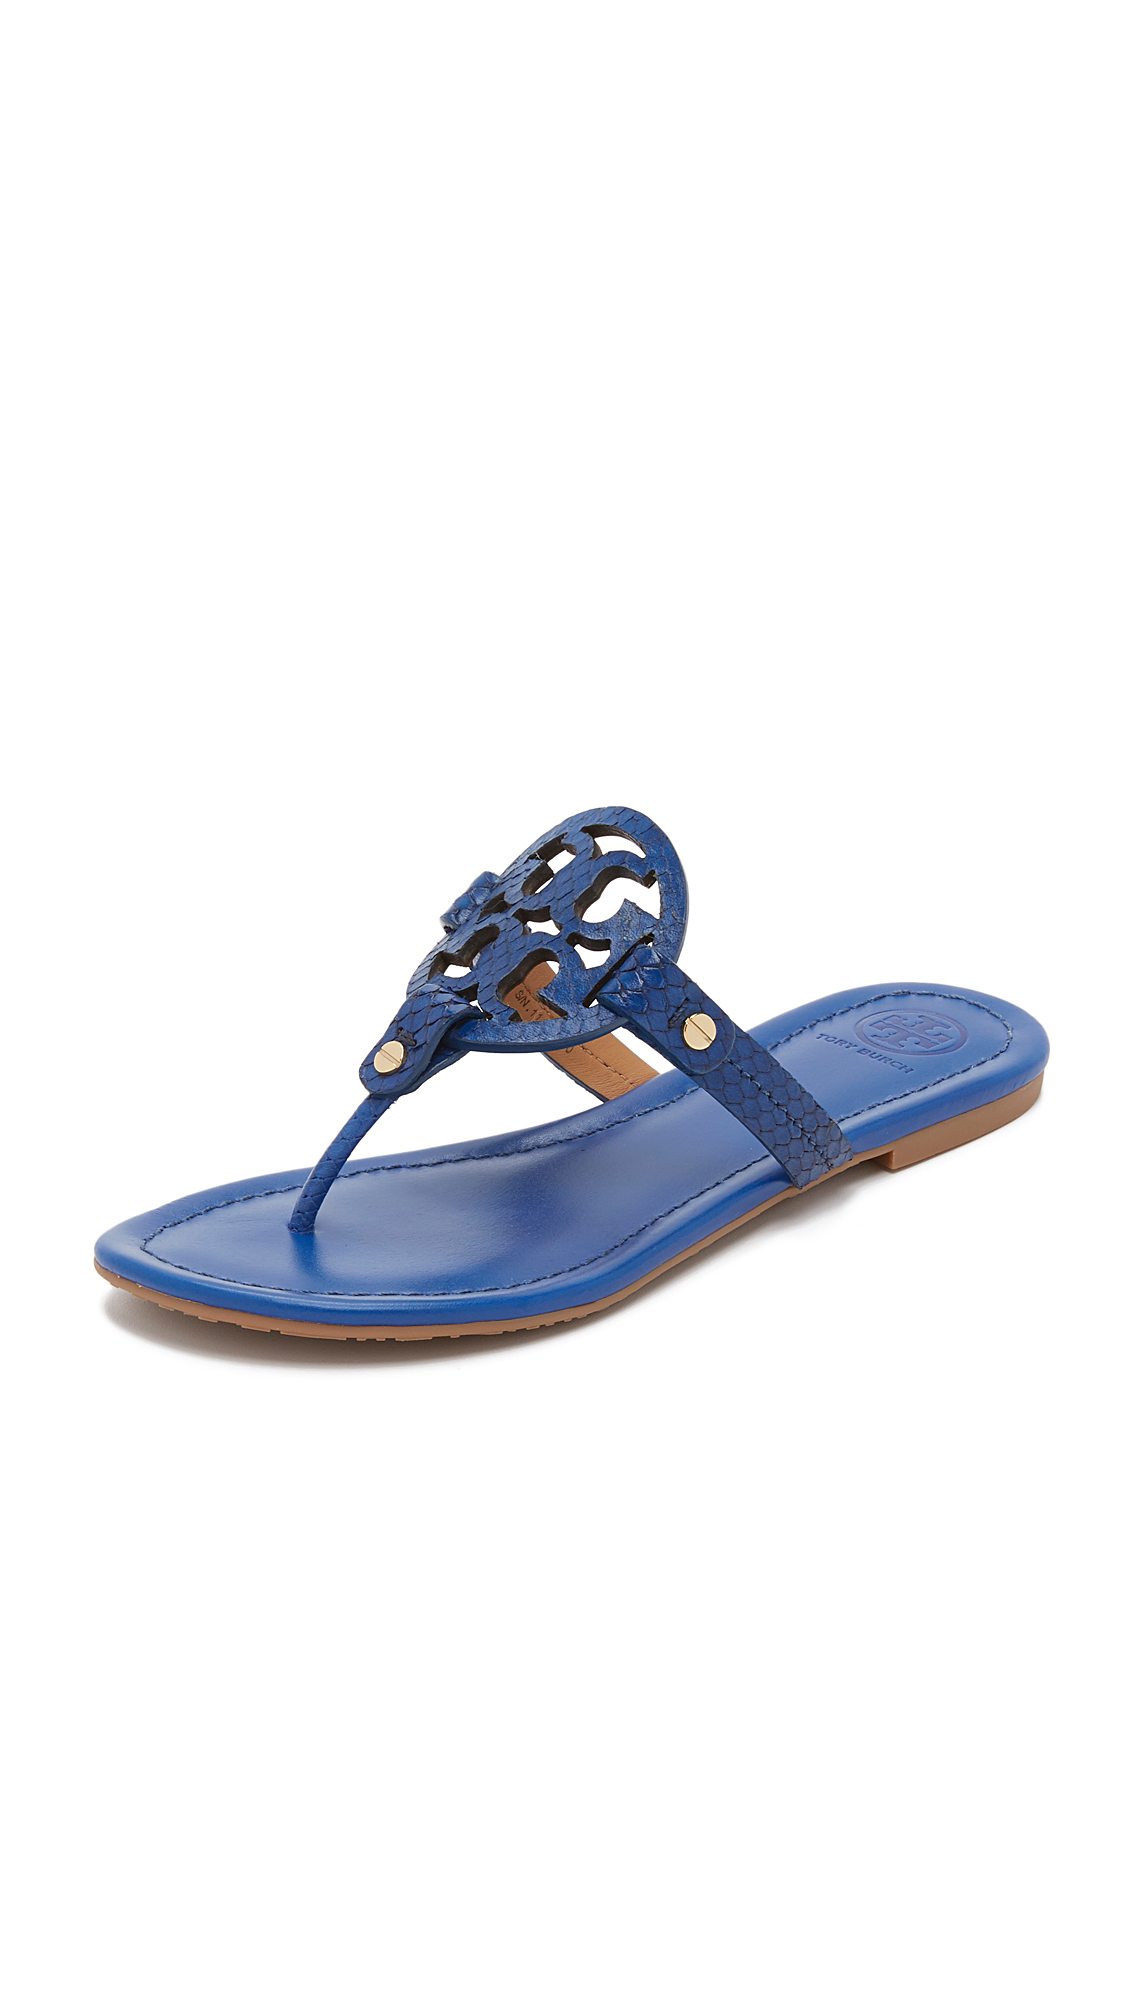 Lyst - Tory Burch Miller Sandals in Blue